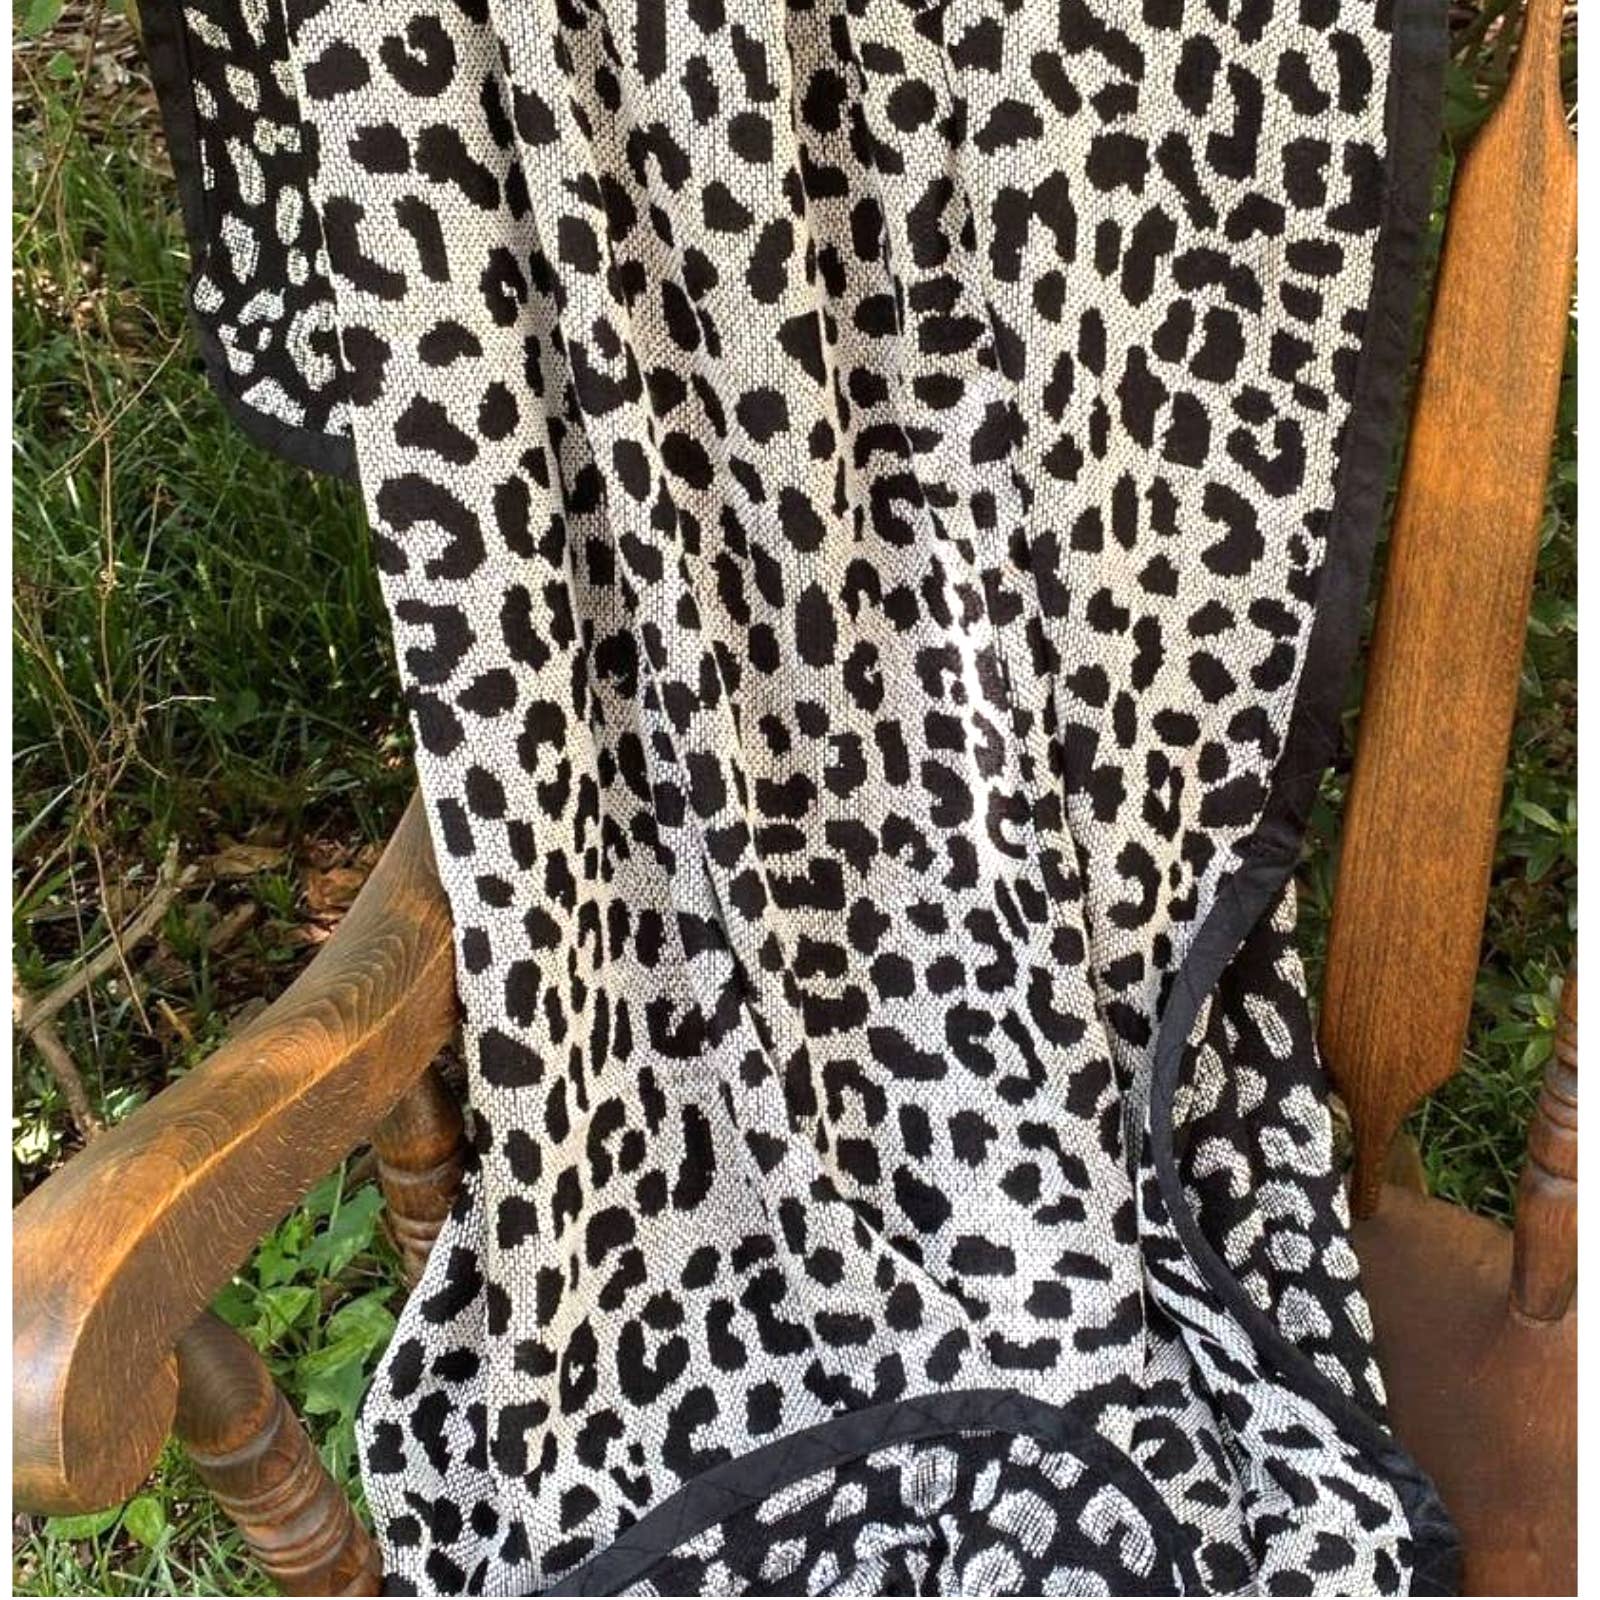 Leopard Animal Print Throw Decorative Hemmed Reversible Black Silver 50x60" NEW